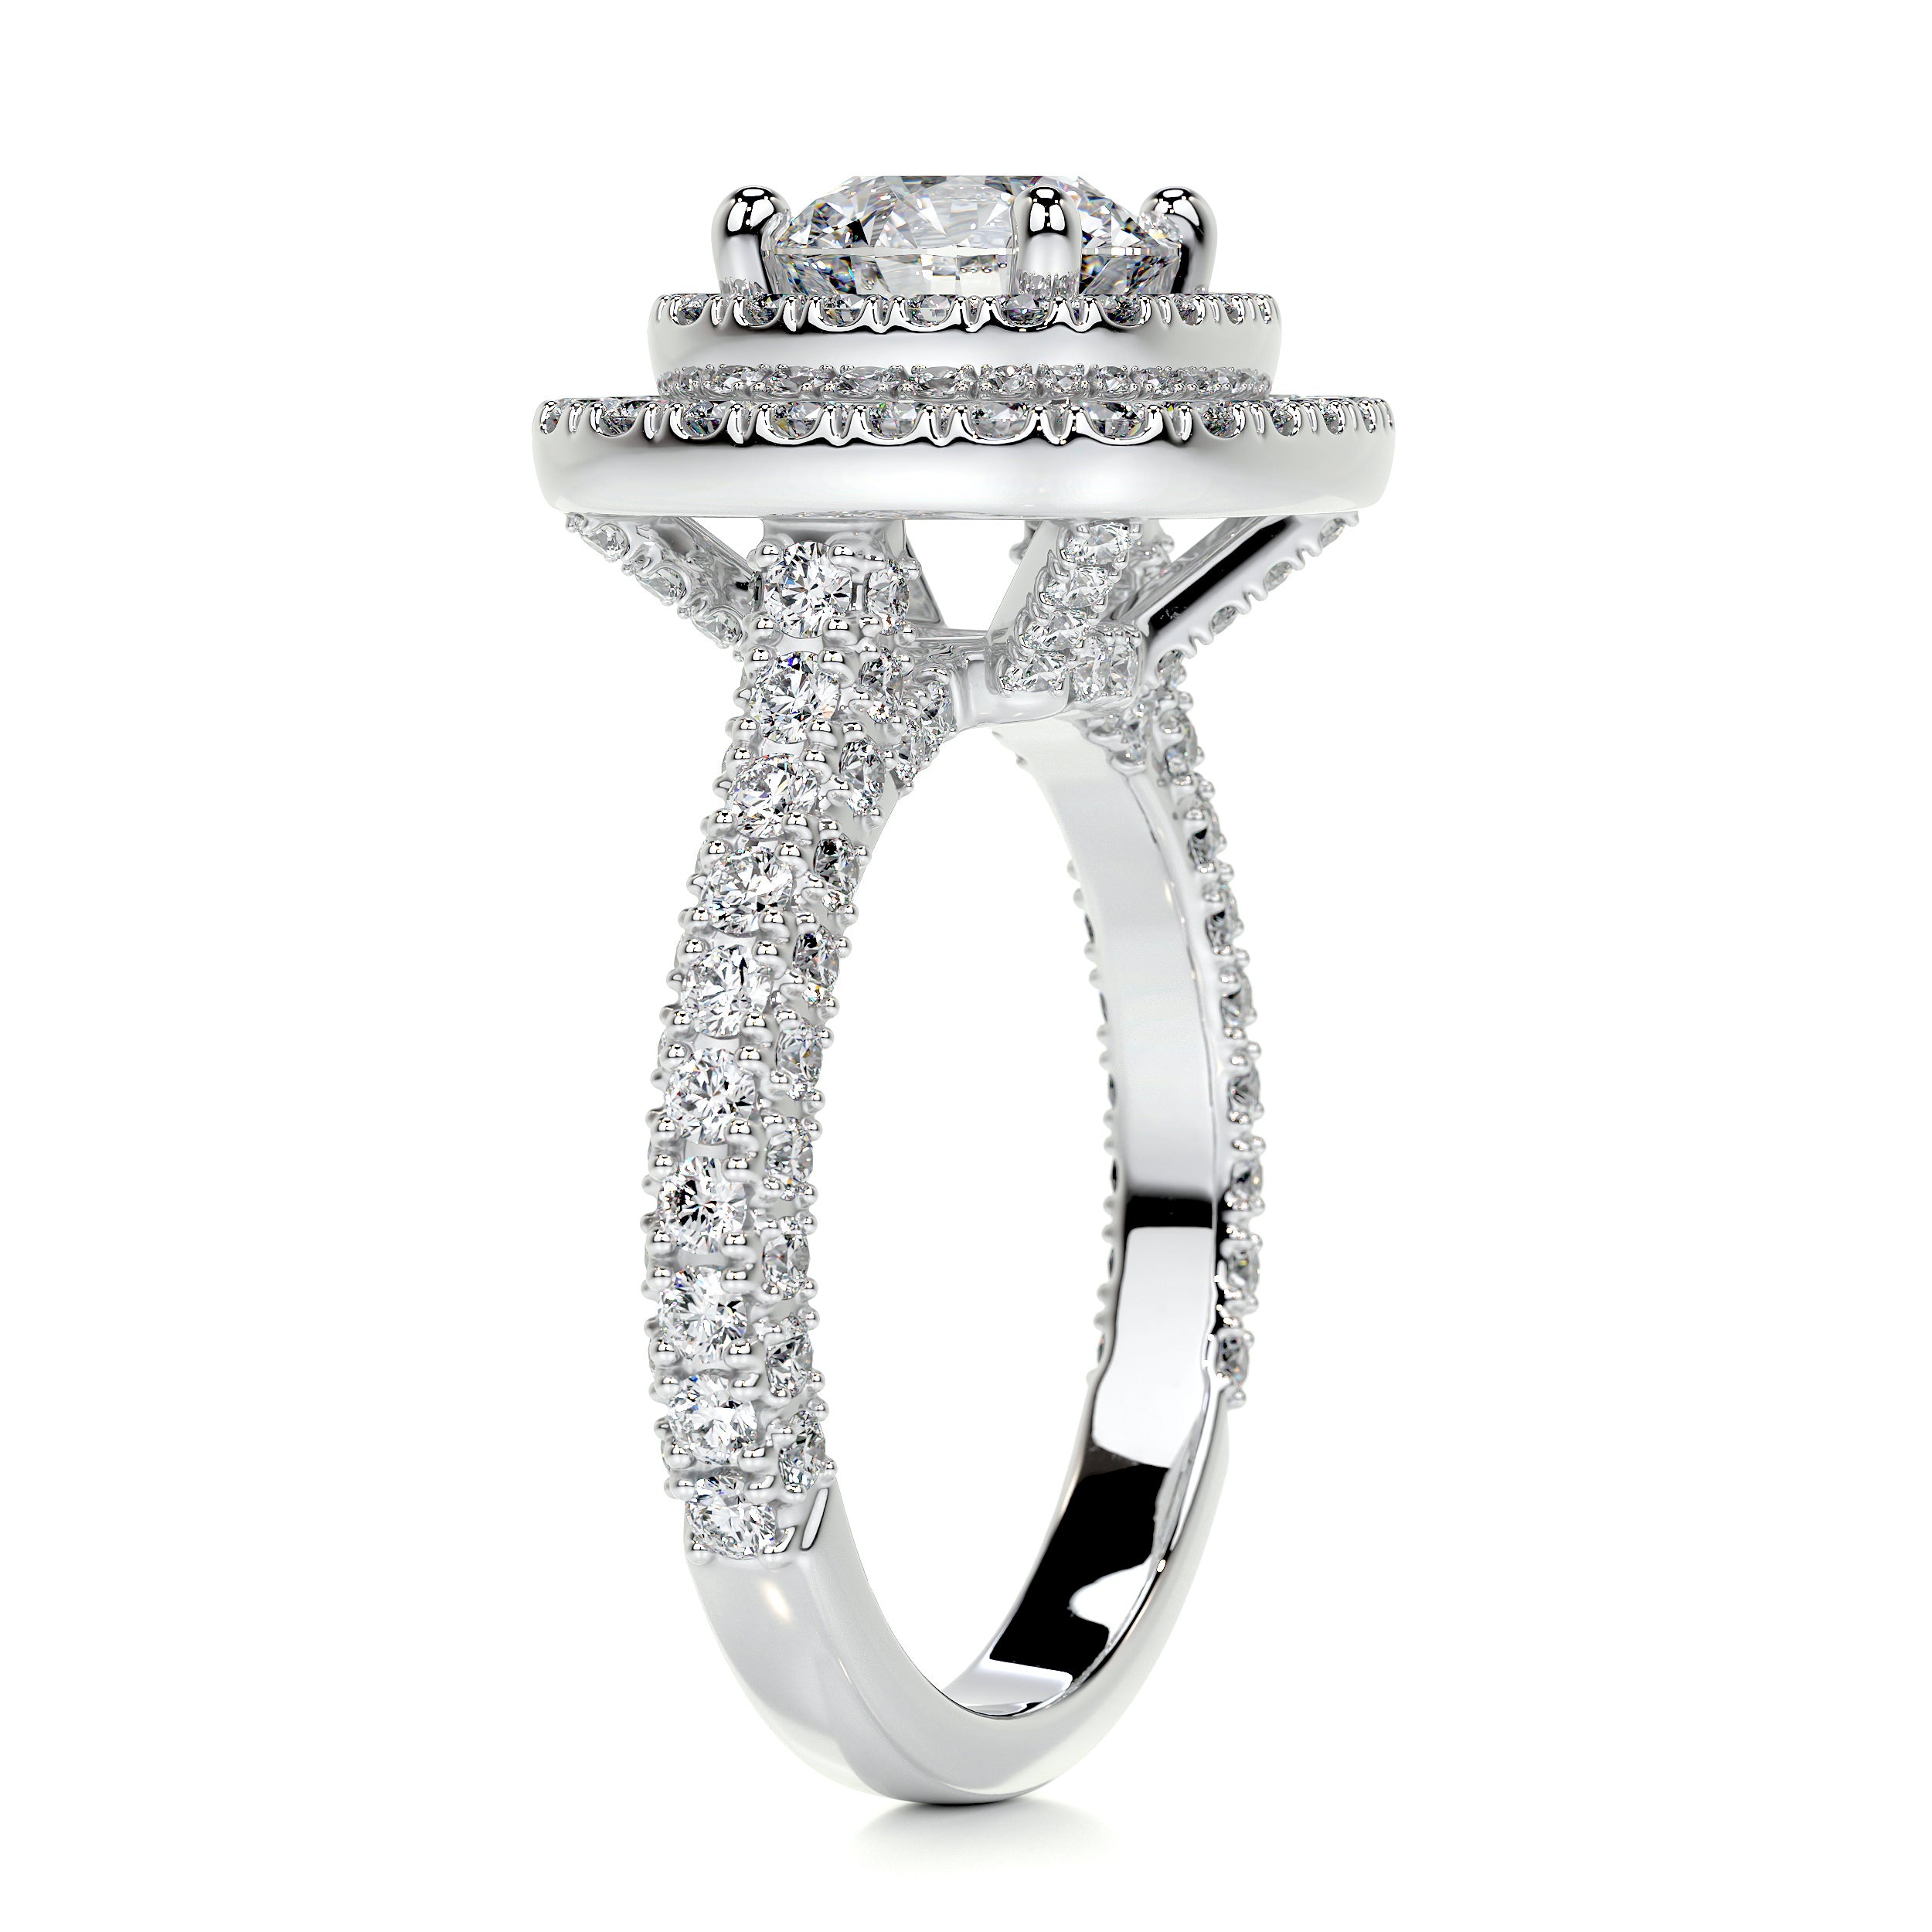 Carmen Diamond Engagement Ring   (2.25 Carat) -14K White Gold